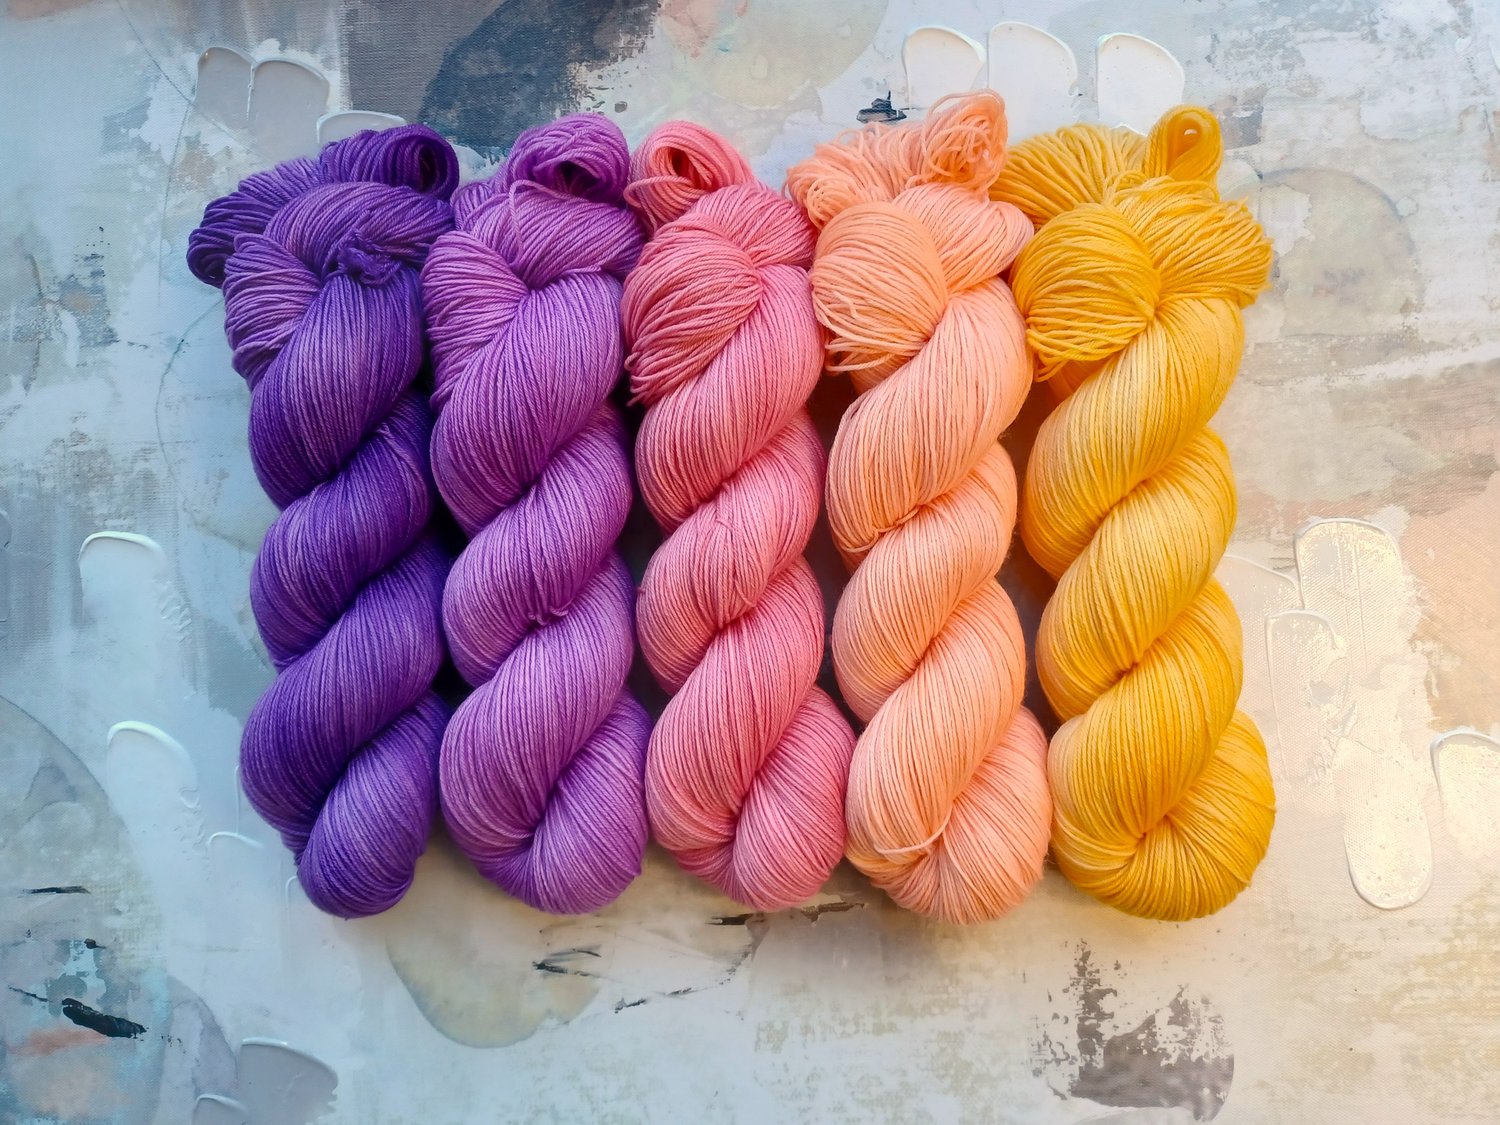 Royalty - Hand-dyed Yarn, Sock Yarn, Wool Yarn, Dark Purple - 75